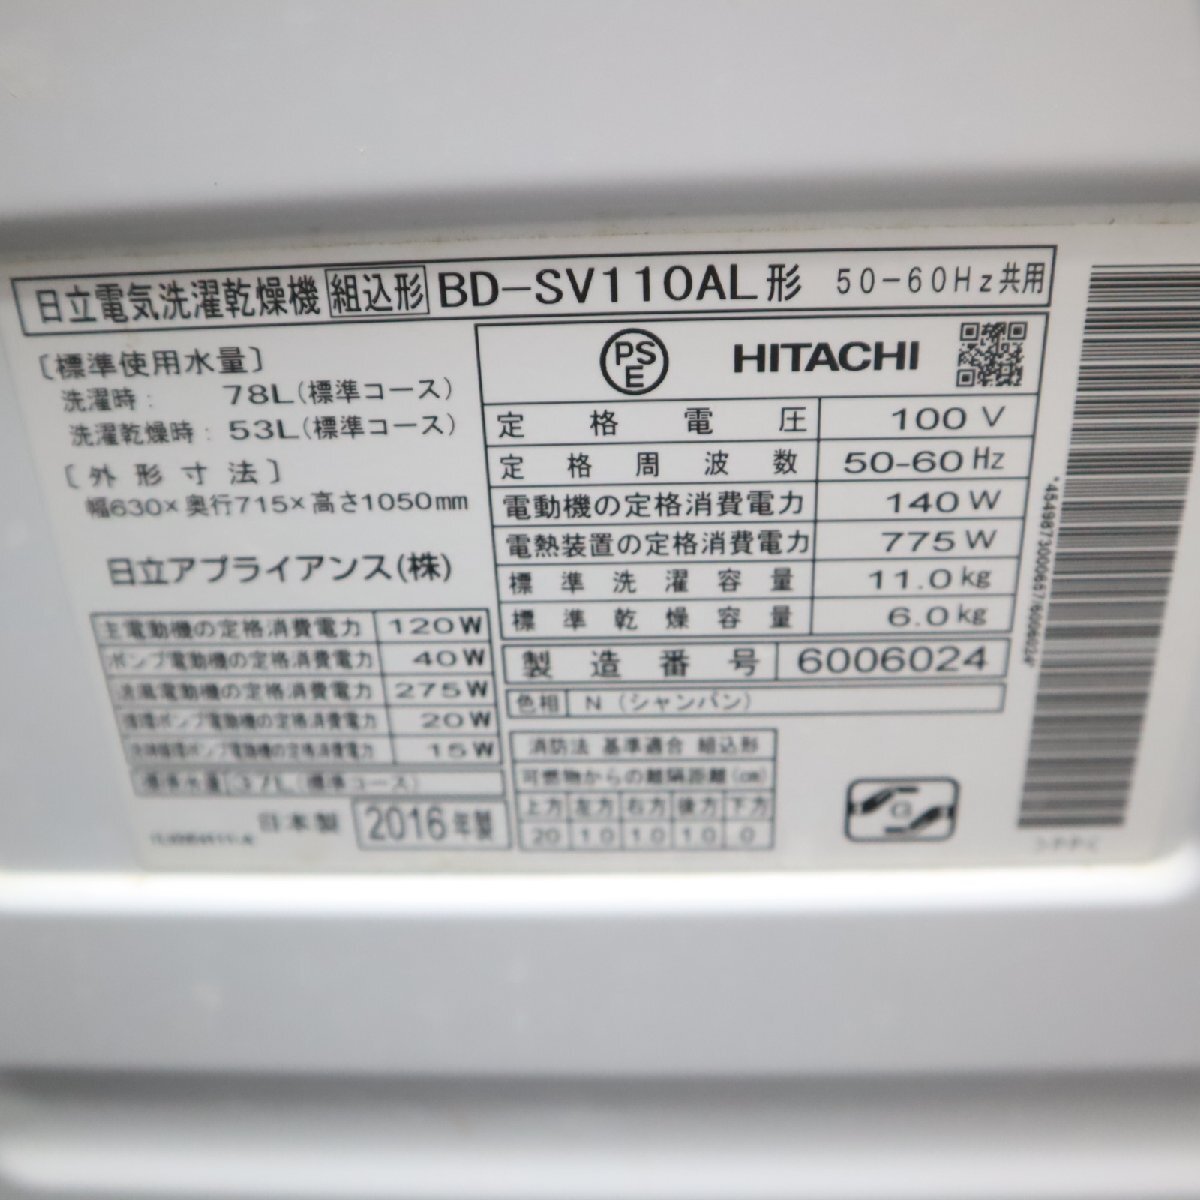 Y-30015* district designation free shipping * Hitachi drum type laundry dryer 11K[ heat manner iron big drum BD-SV110A